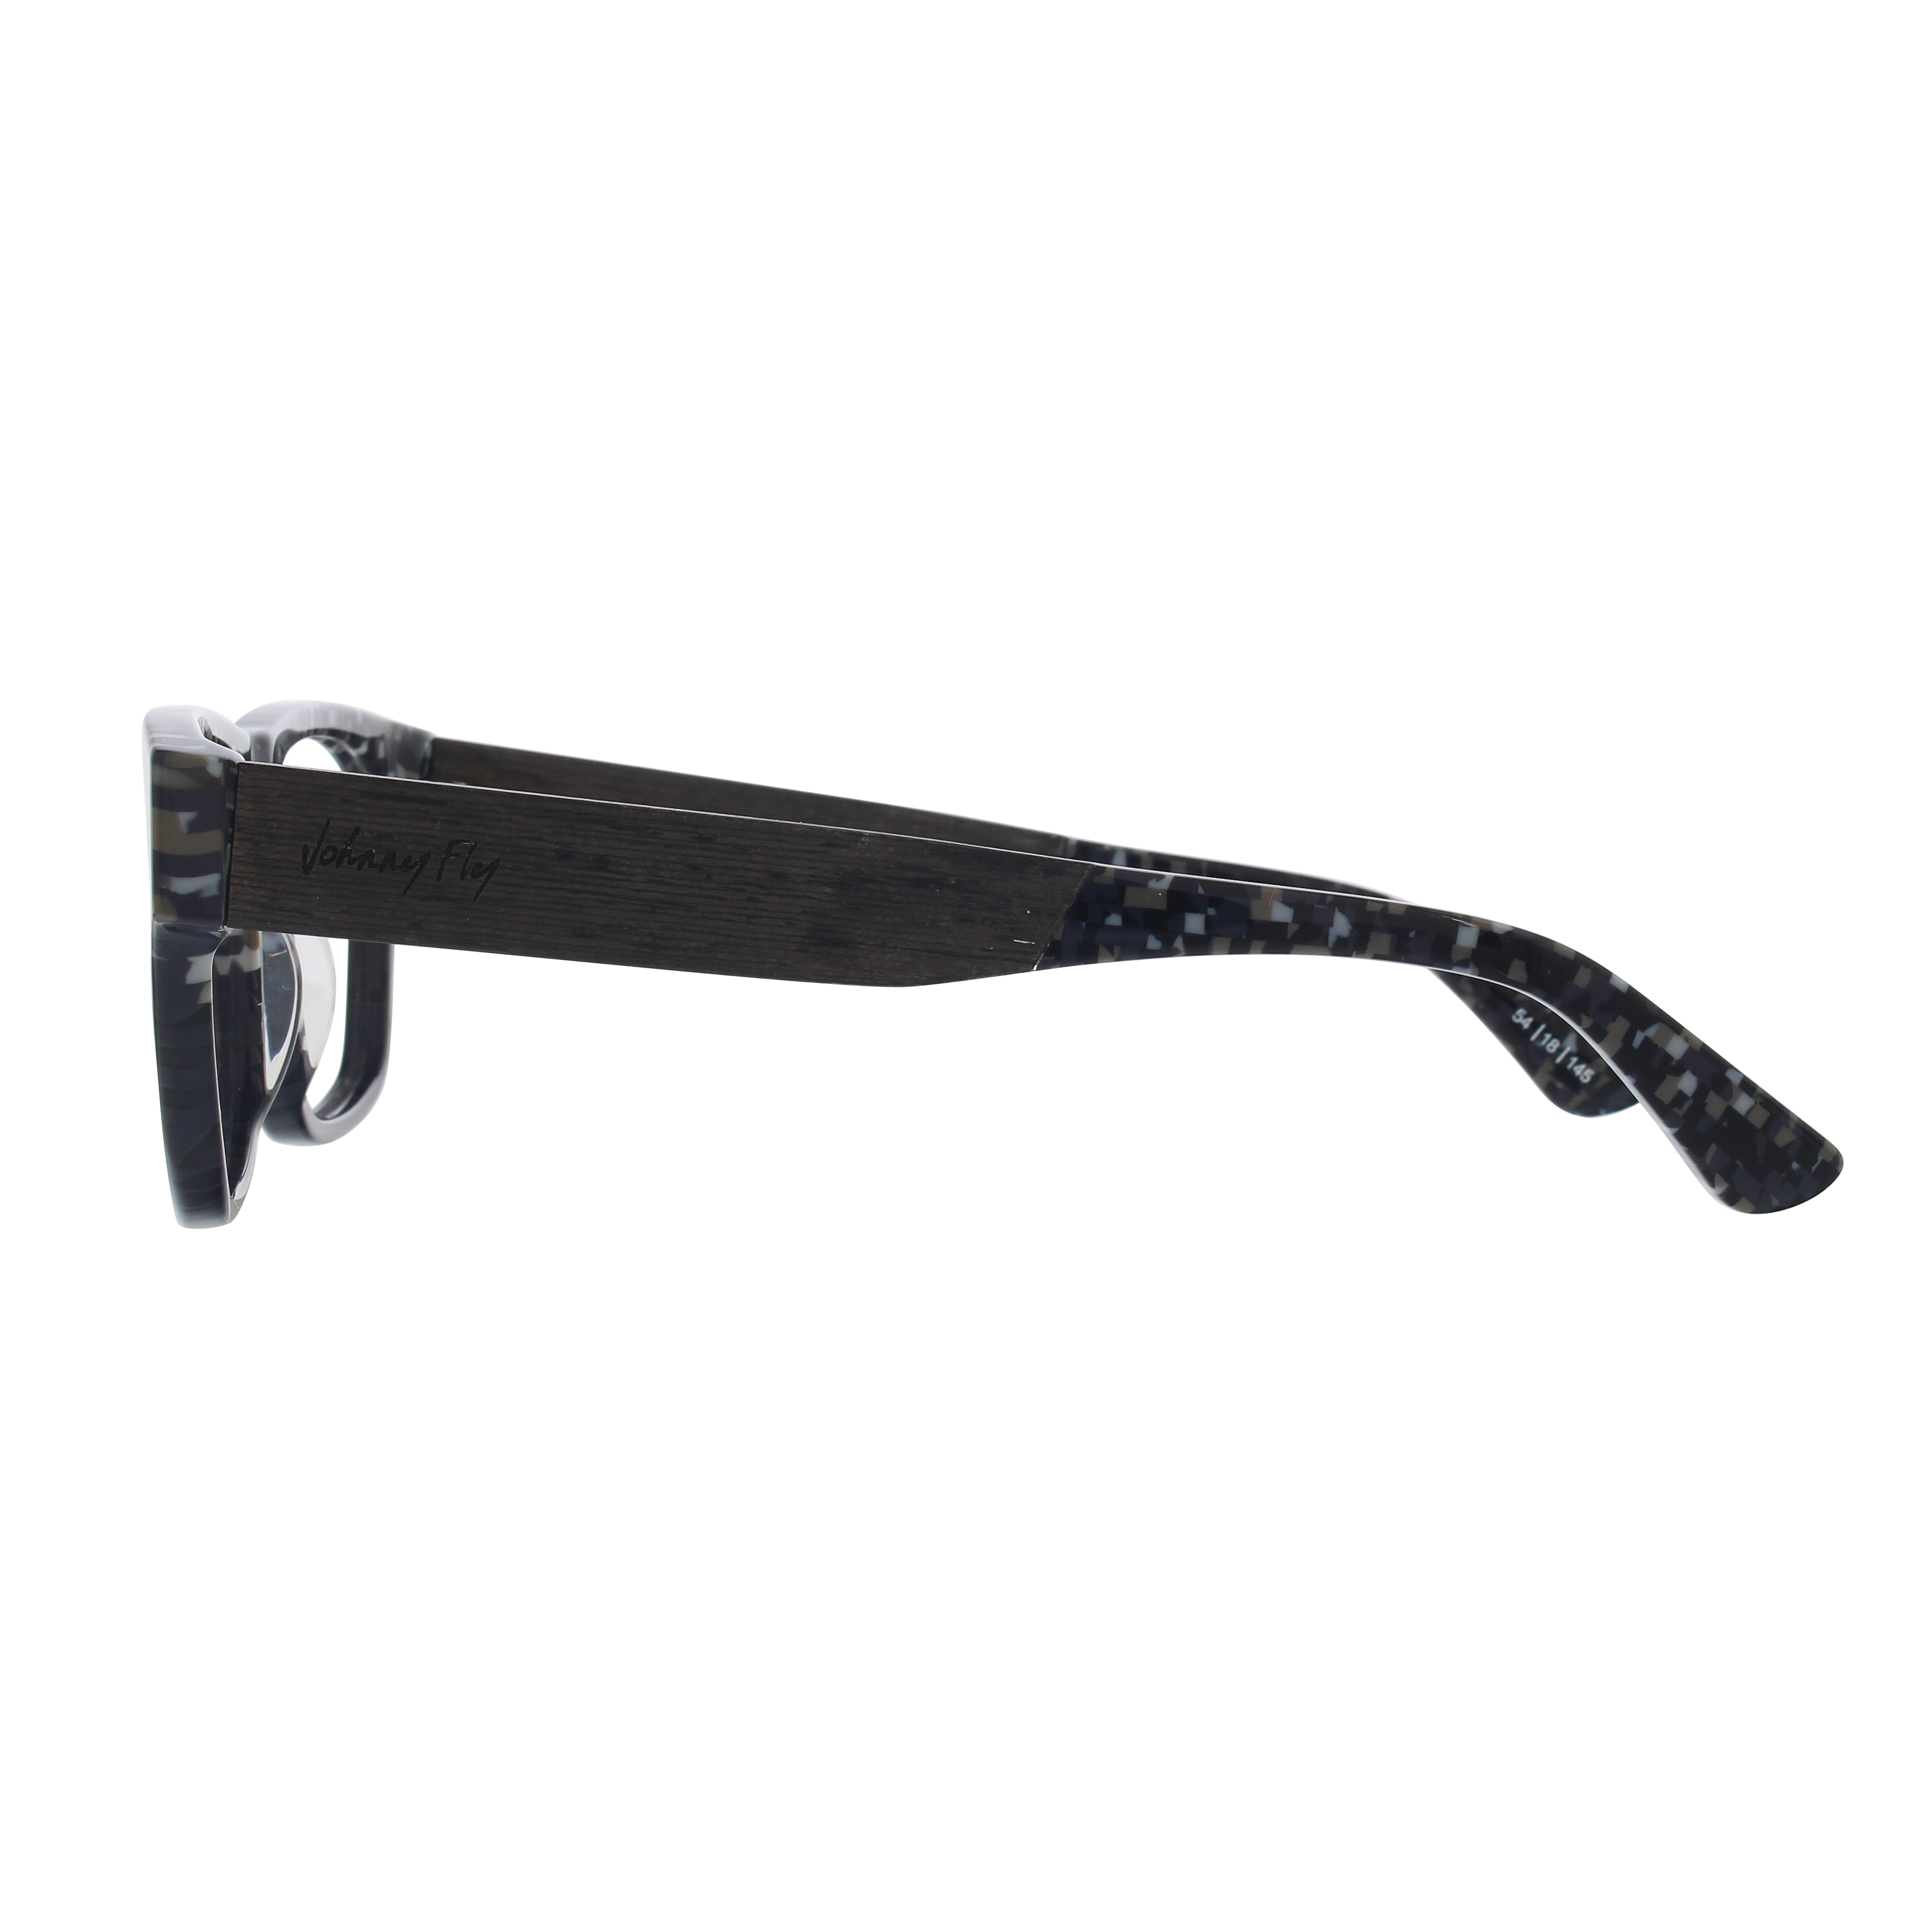 ARROW Frame - 8-Bit - Eyeglasses Frame - Johnny Fly Eyewear | 